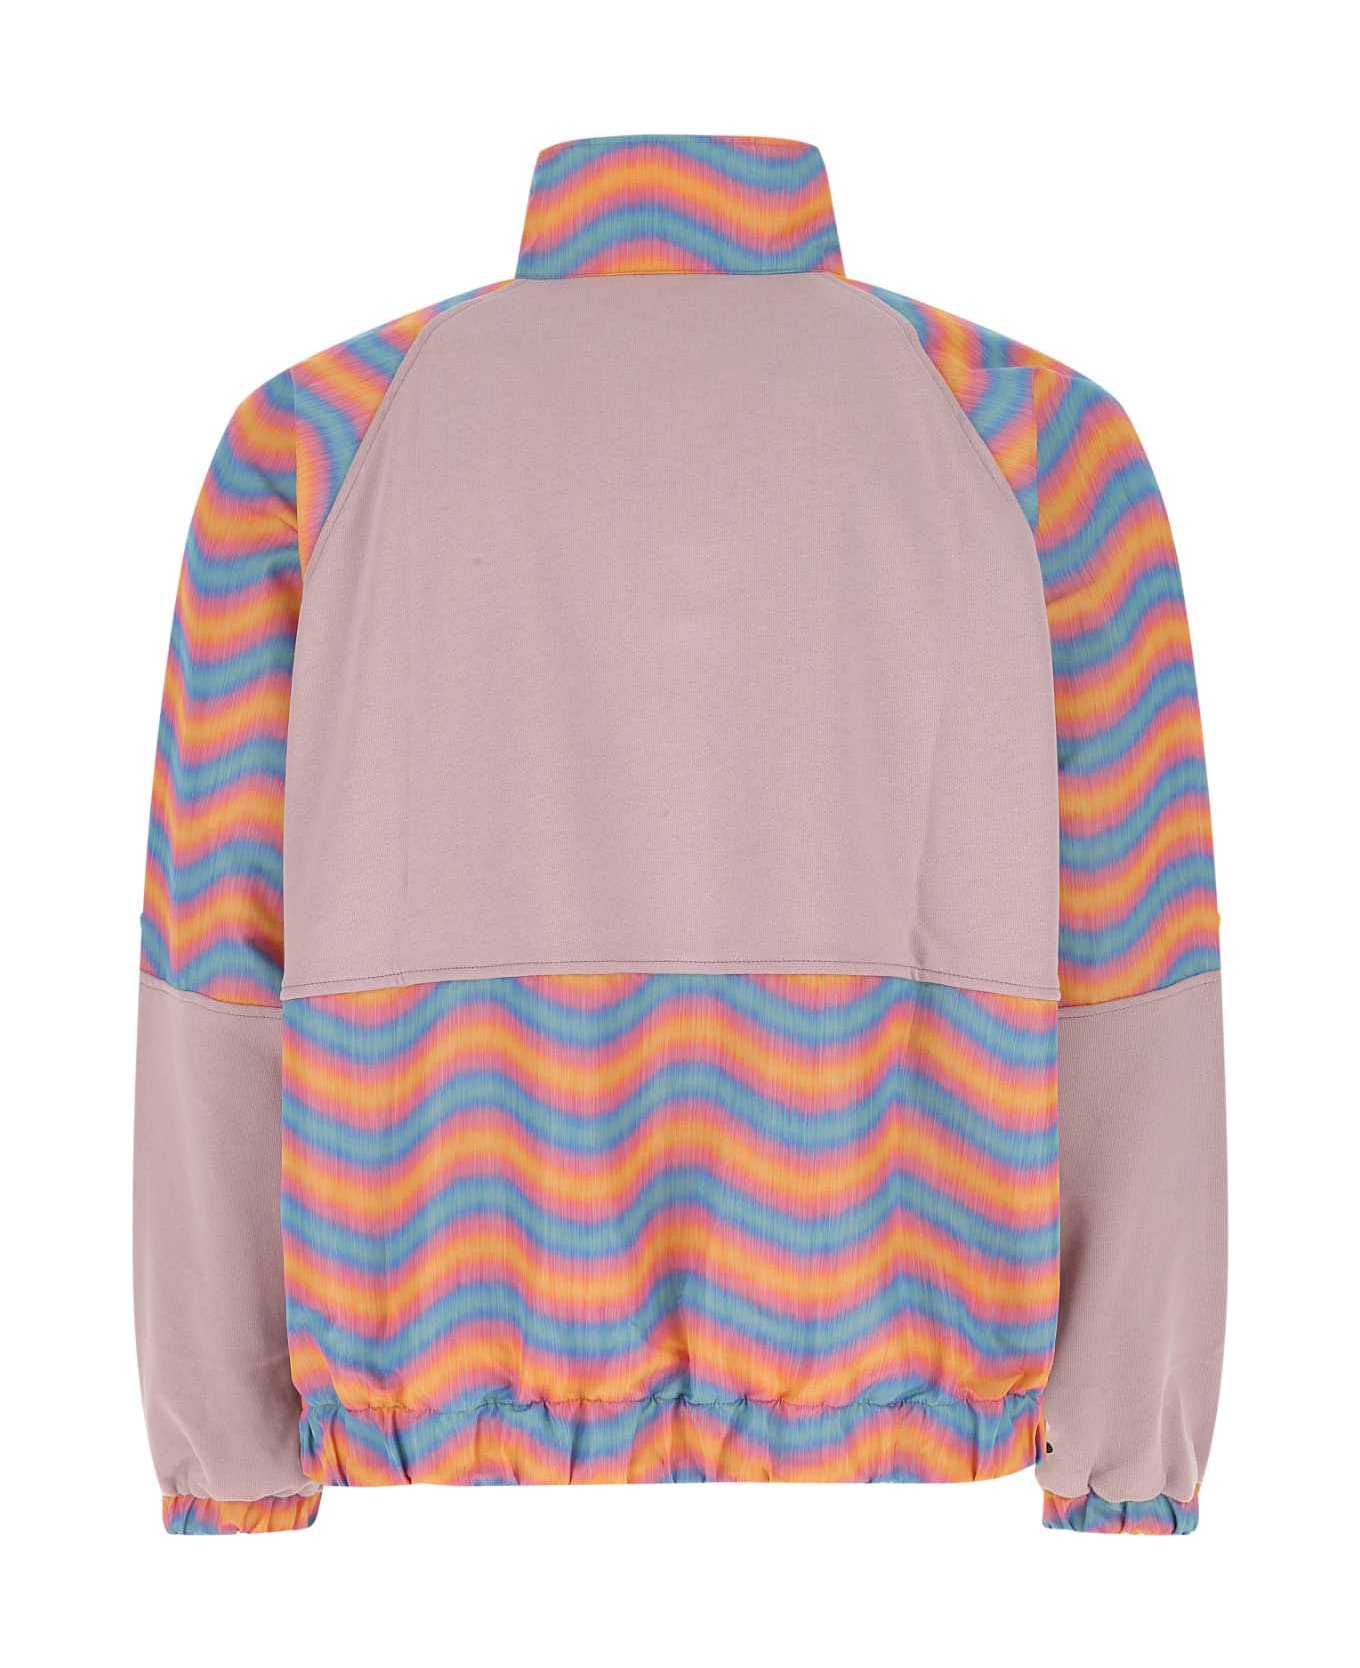 Bluemarble Multicolor Cotton And Nylon Oversize Sweatshirt - MIX